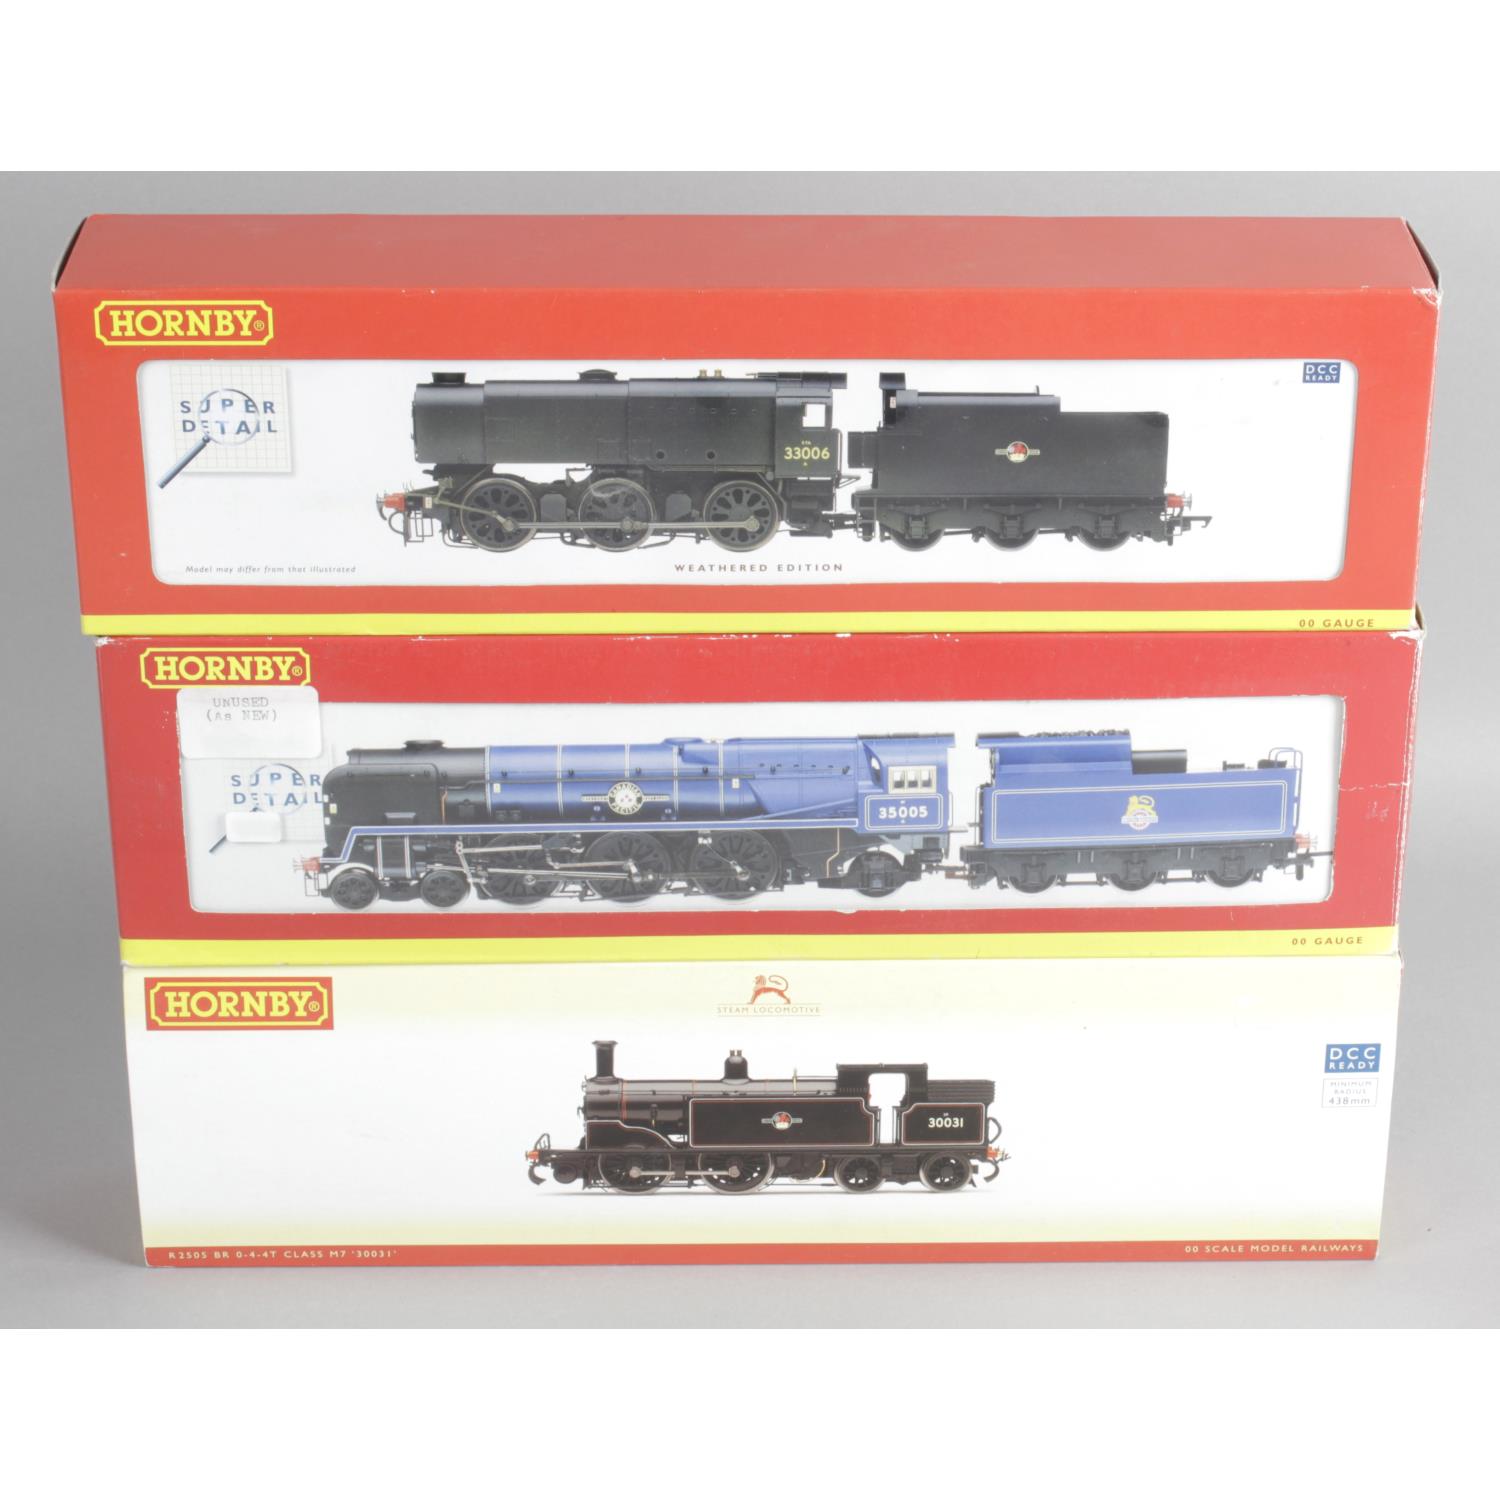 Ten Hornby 00 gauge model railway locomotives and trains,